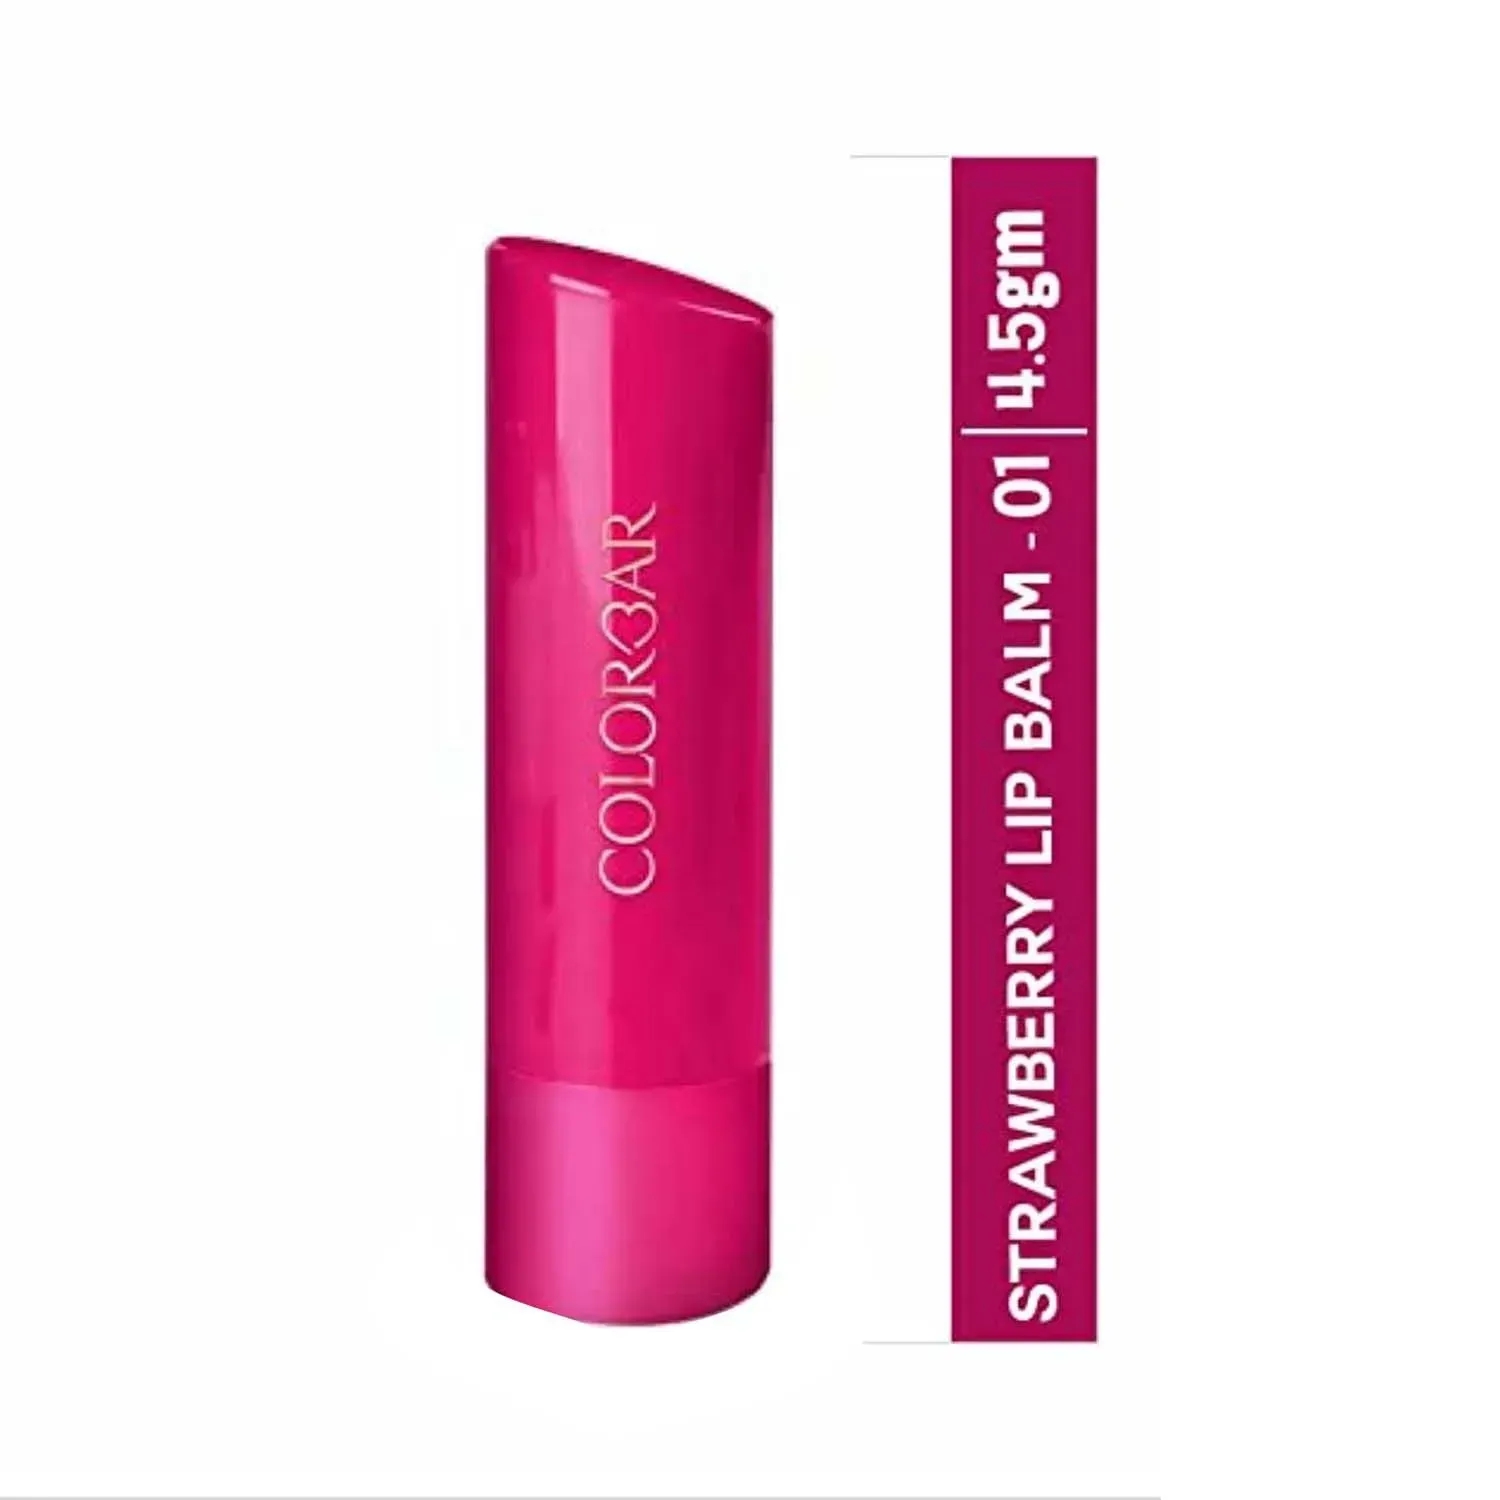 Colorbar | Colorbar Strawberry Lip Balm SPF 15 - 01 Pink (4.5g)